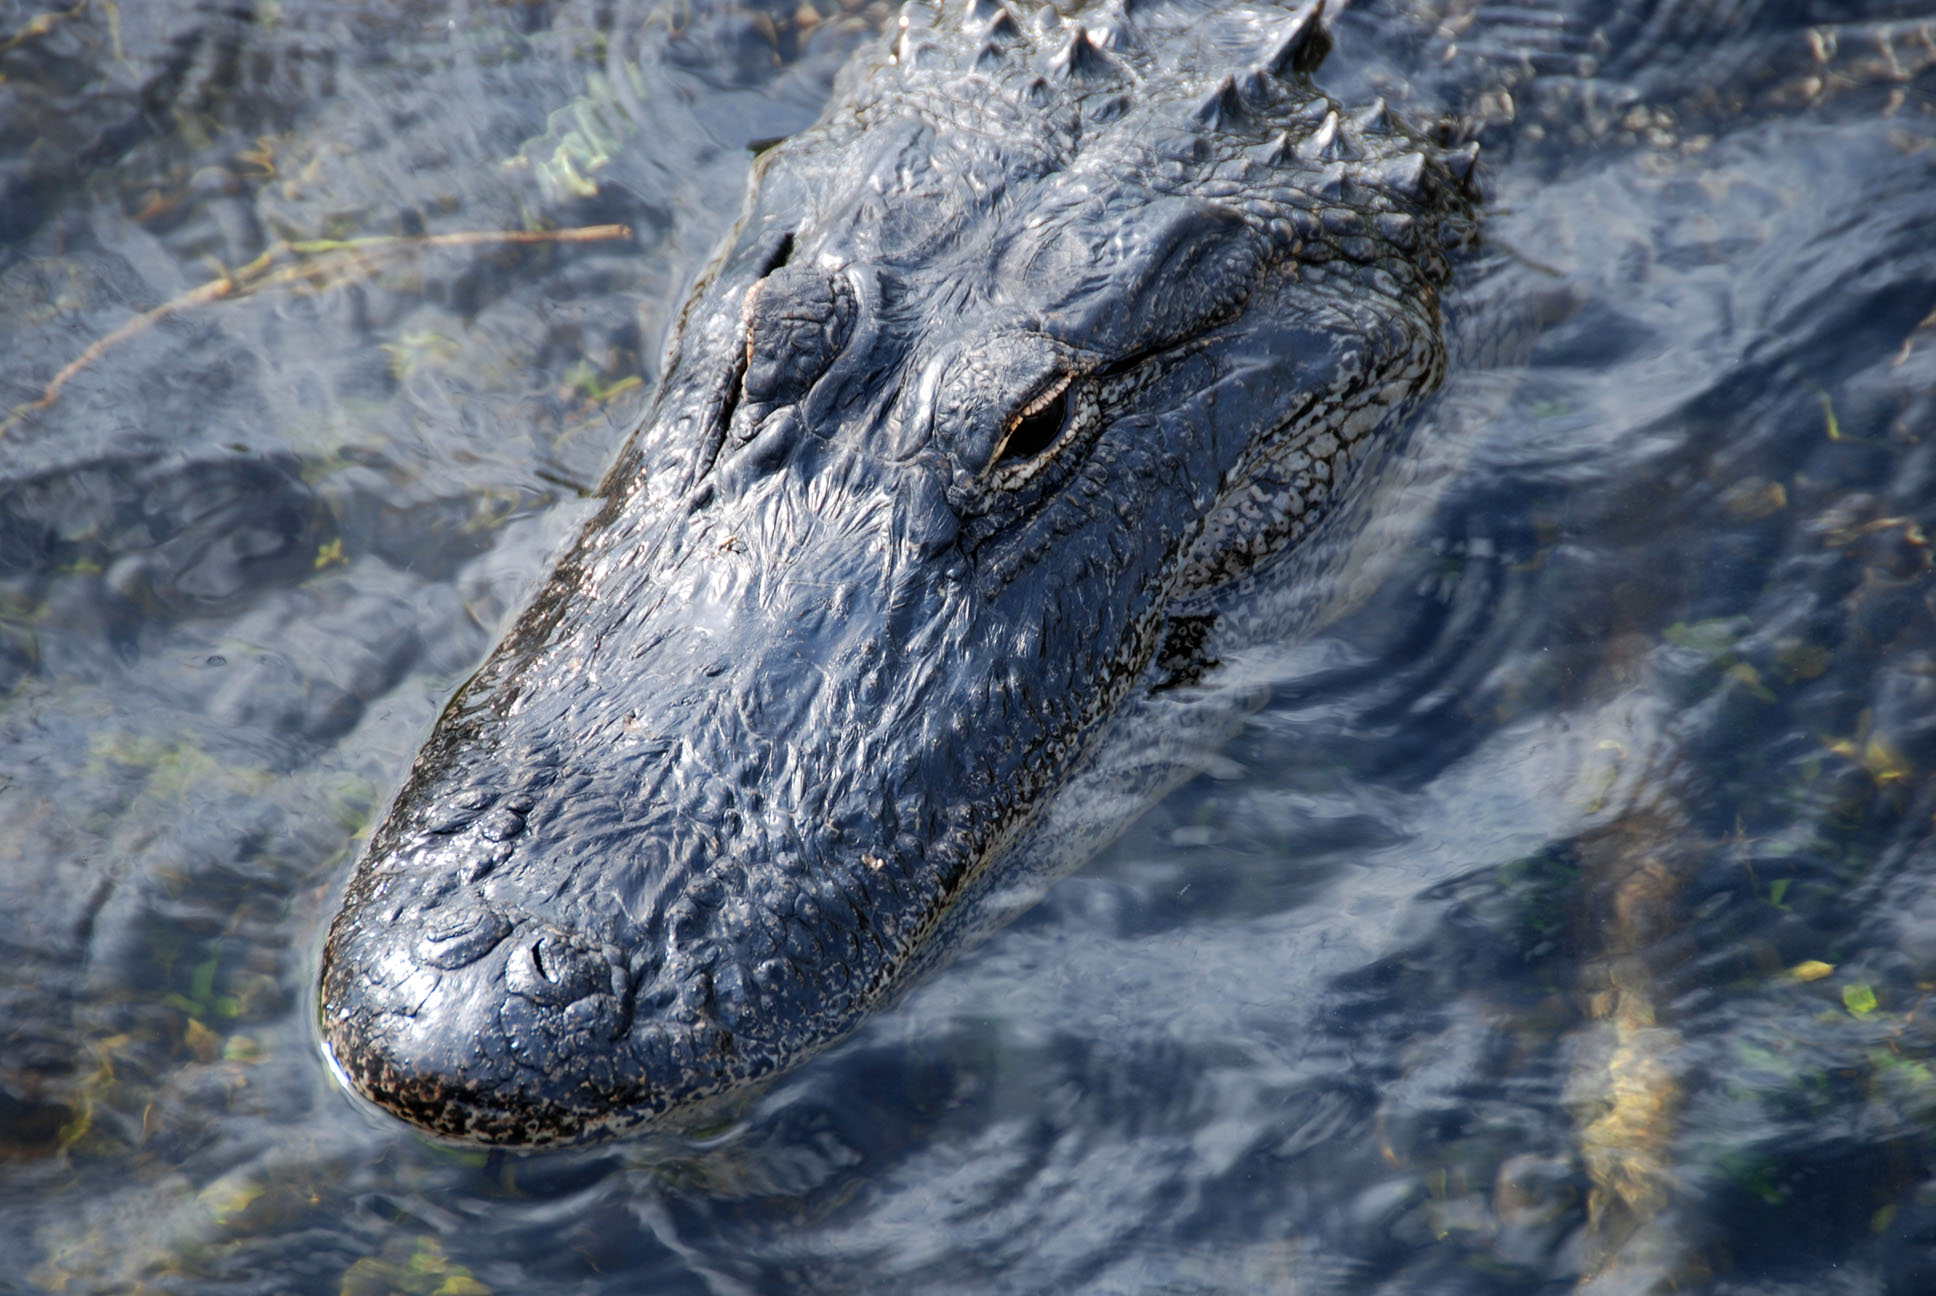 Sleeping Crocodile, Alligator, Amphibian, Animal, Bag, HQ Photo